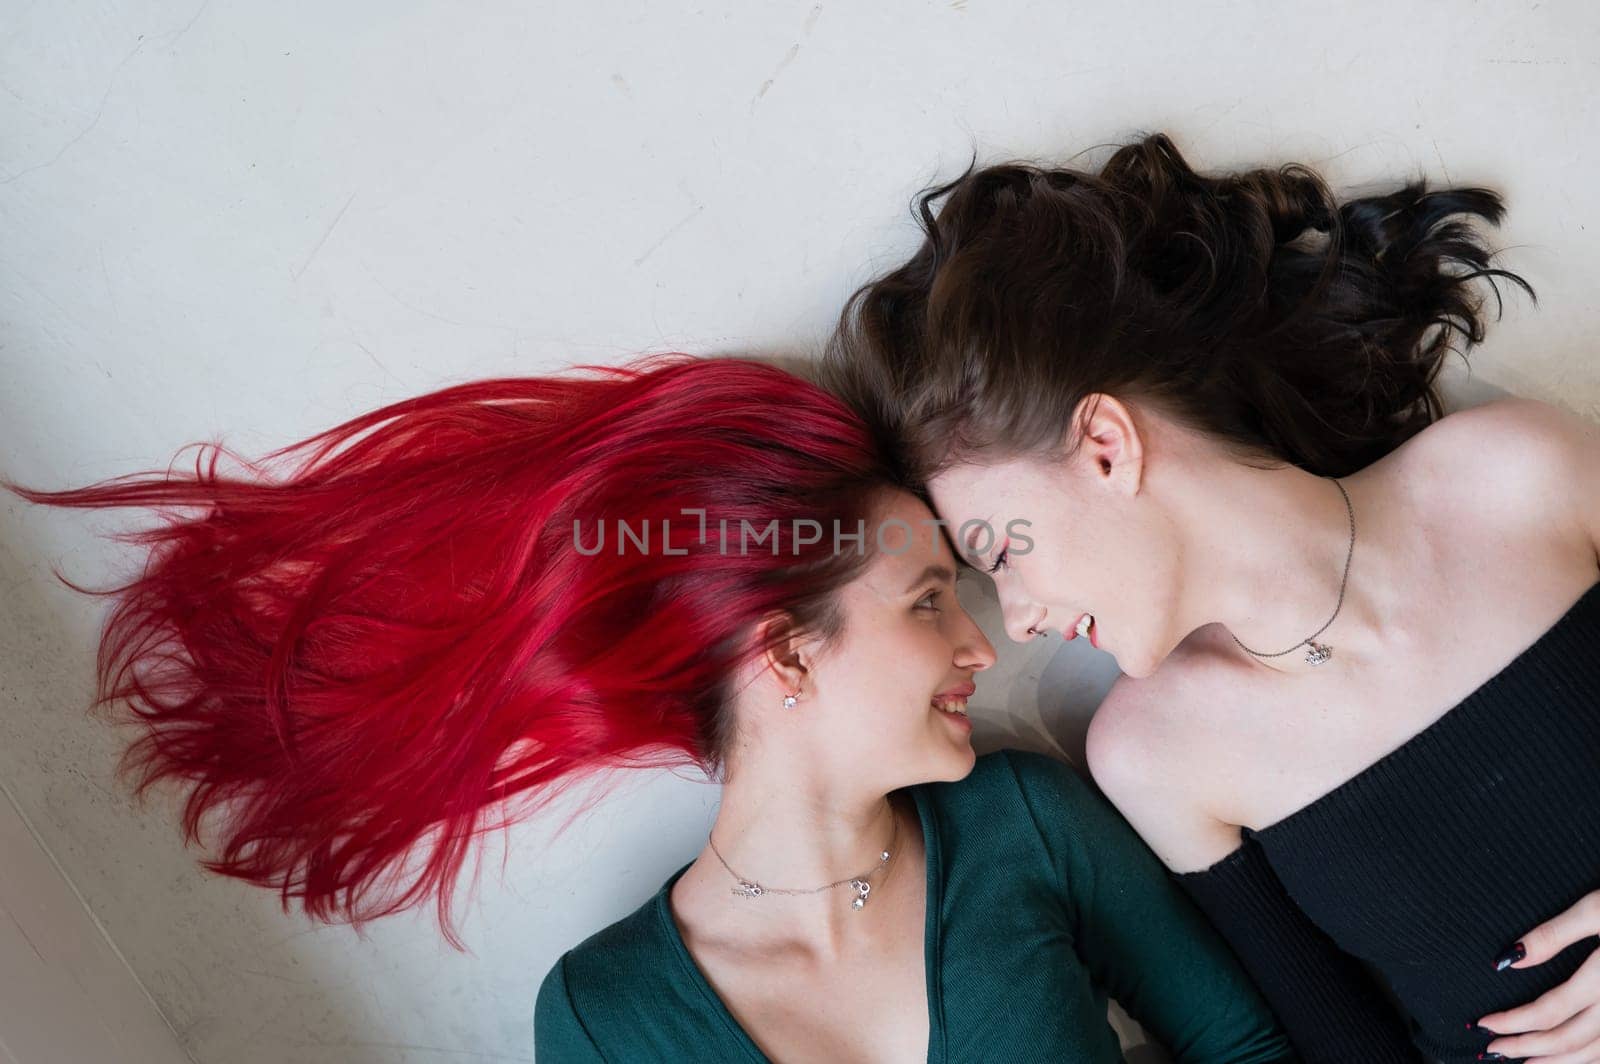 Top view of two women lying side by side. Lesbian intimacy